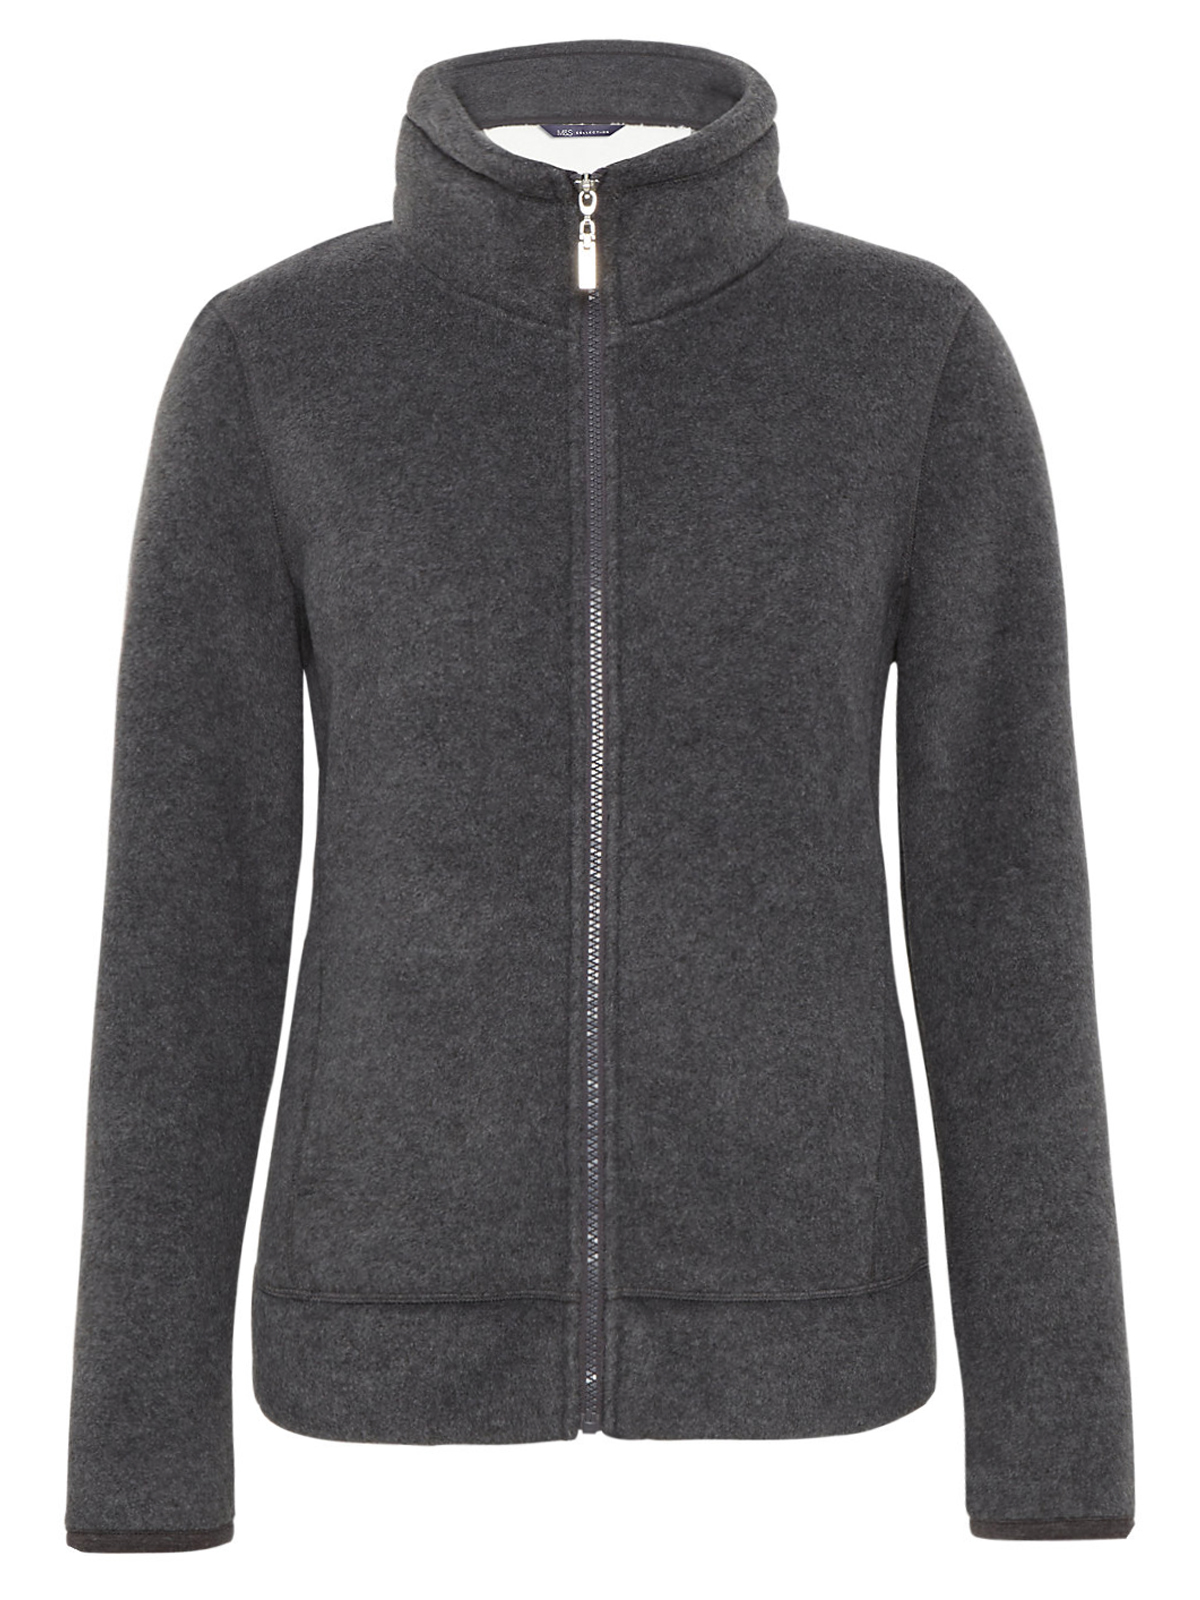 Marks and Spencer - - M&5 GREY Bonded Fleece Zip Through Jacket - Size ...